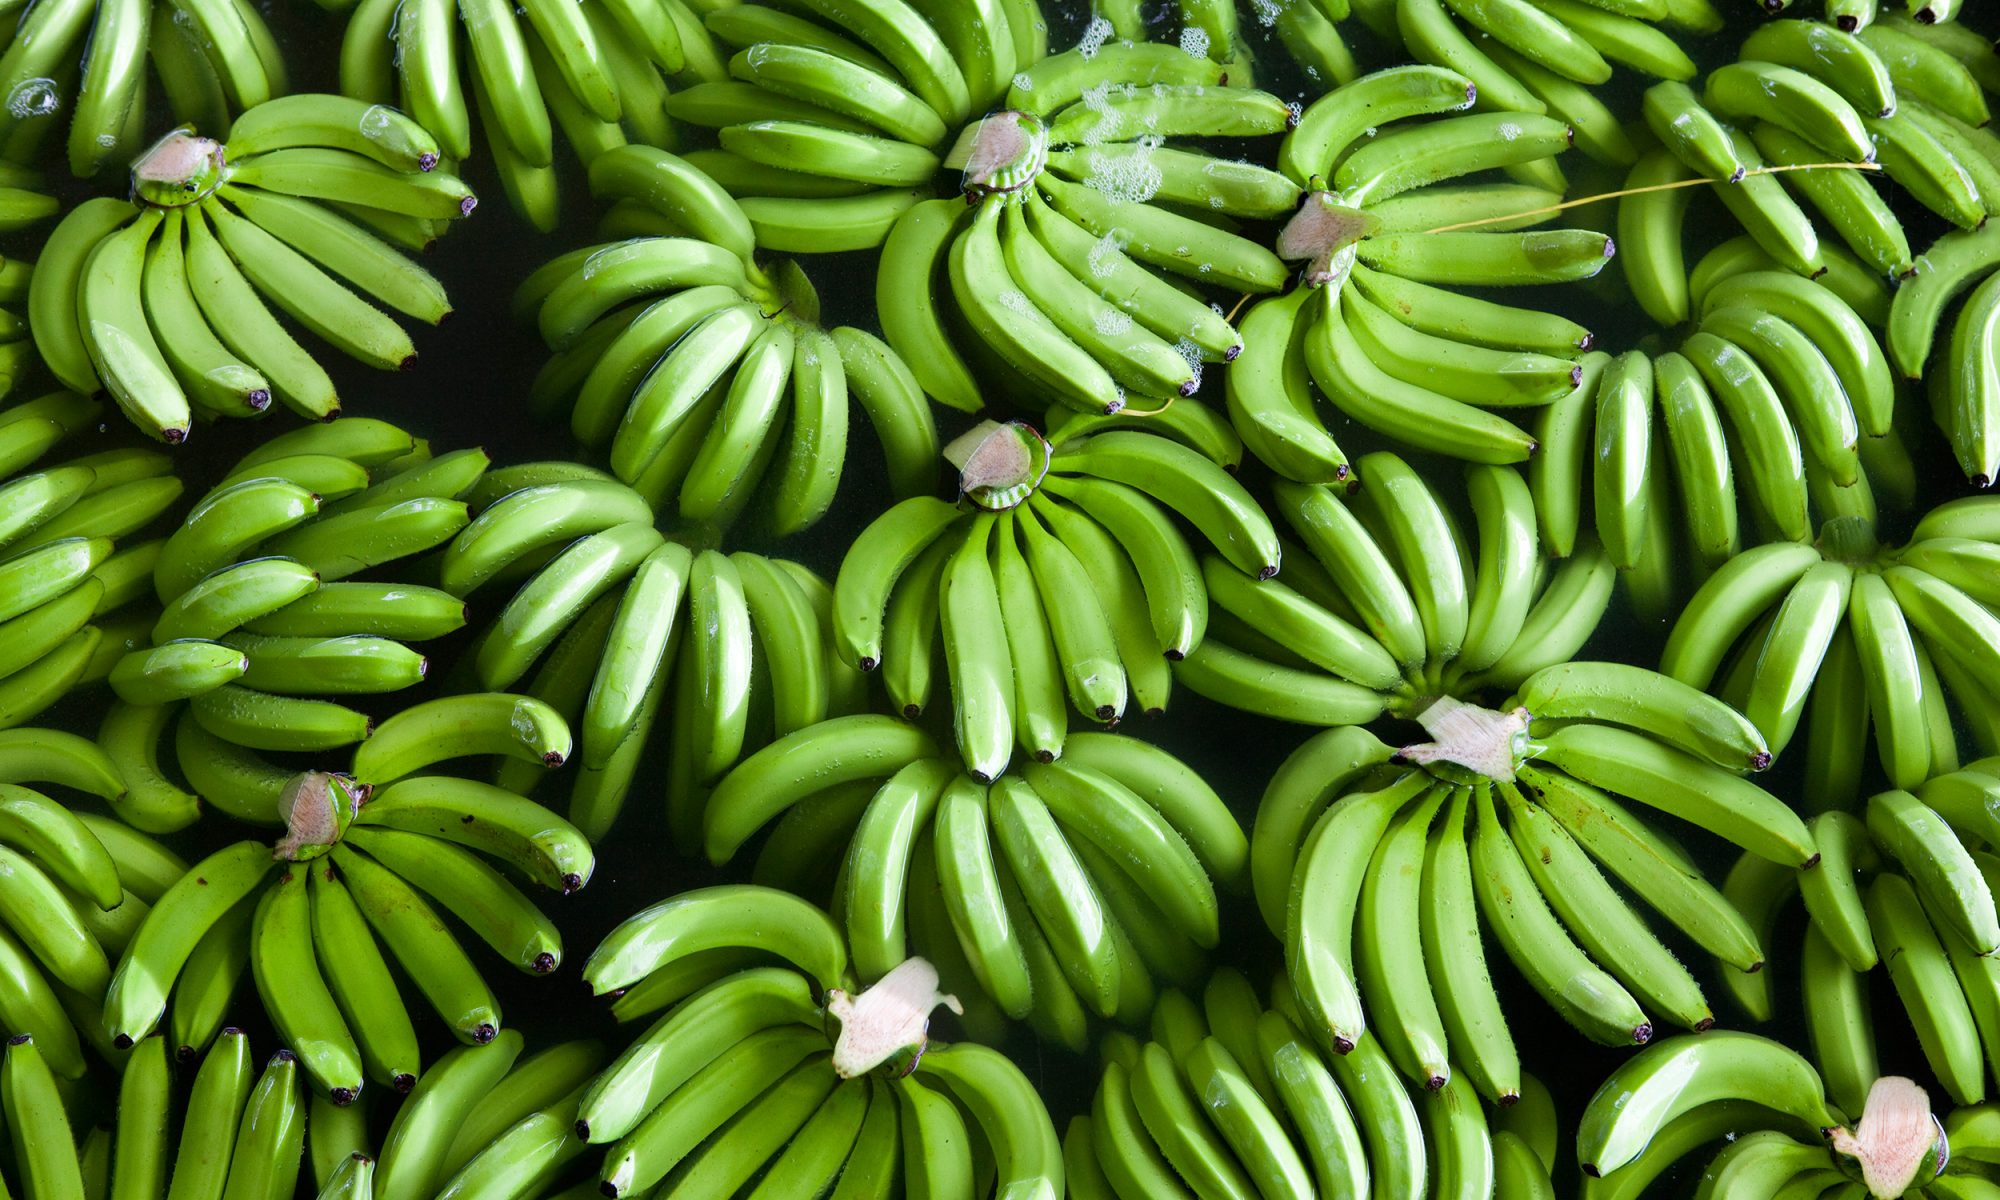 EC: What Is Green Banana Flour?